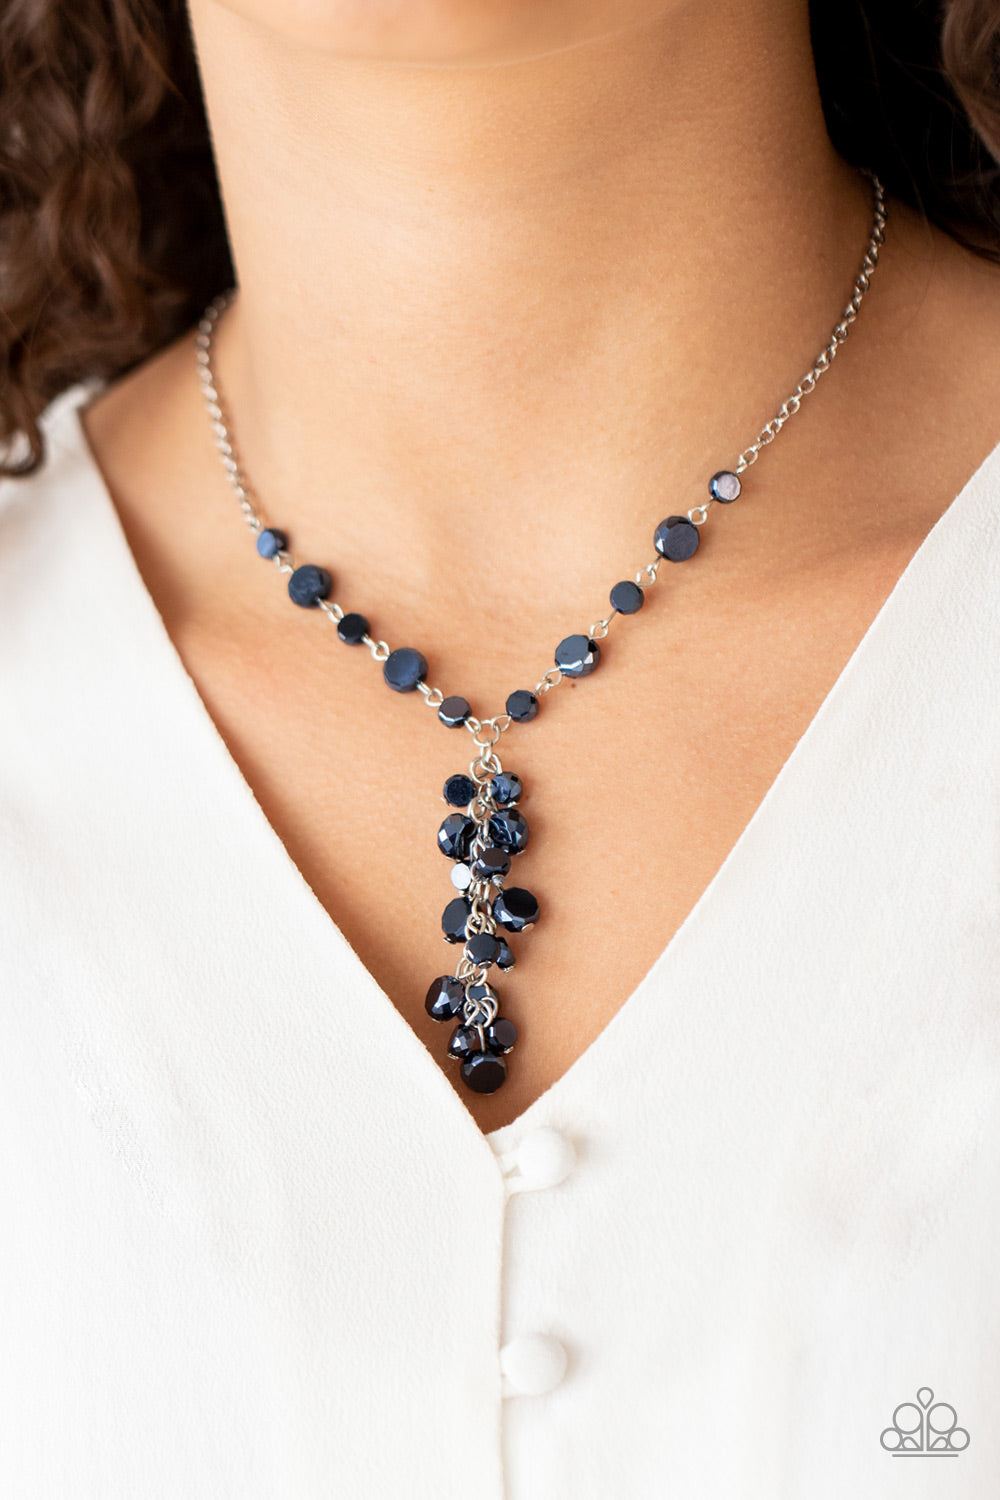 Cosmic Charisma - Blue necklace